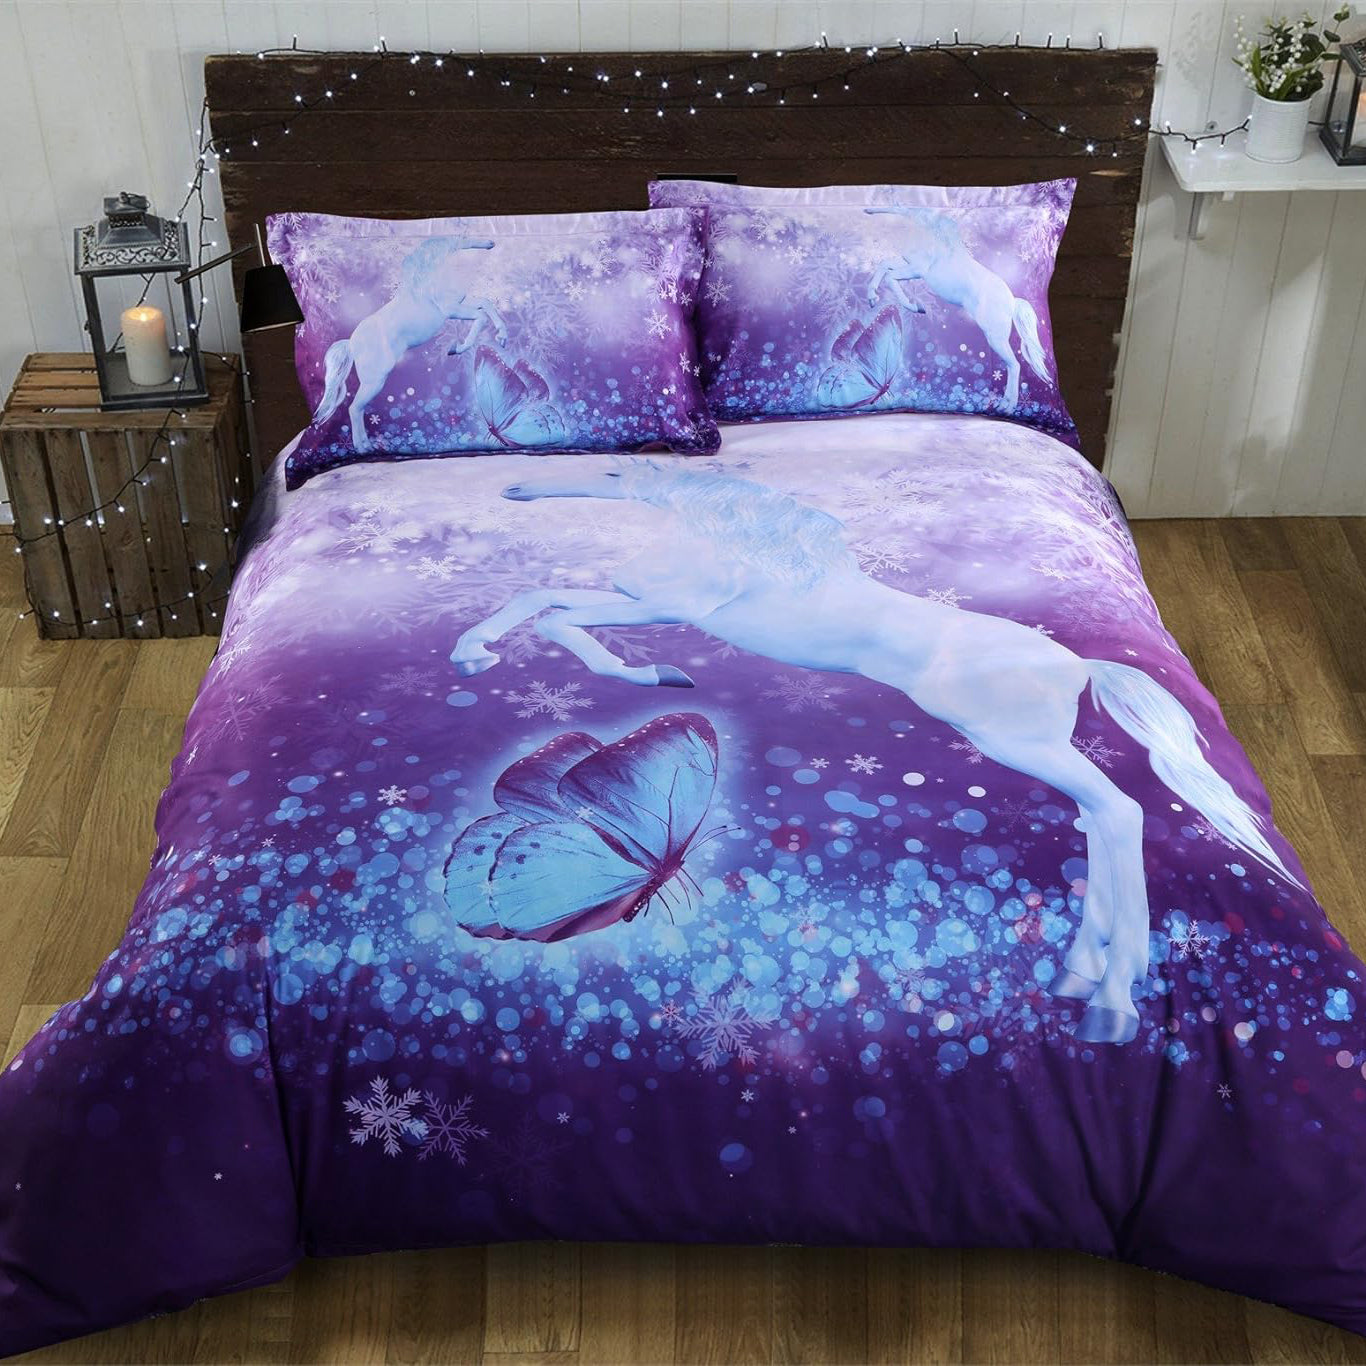 Purple Bedding Set, Jumping Unicorn Printed Purple 4-Piece Duvet Cover Set